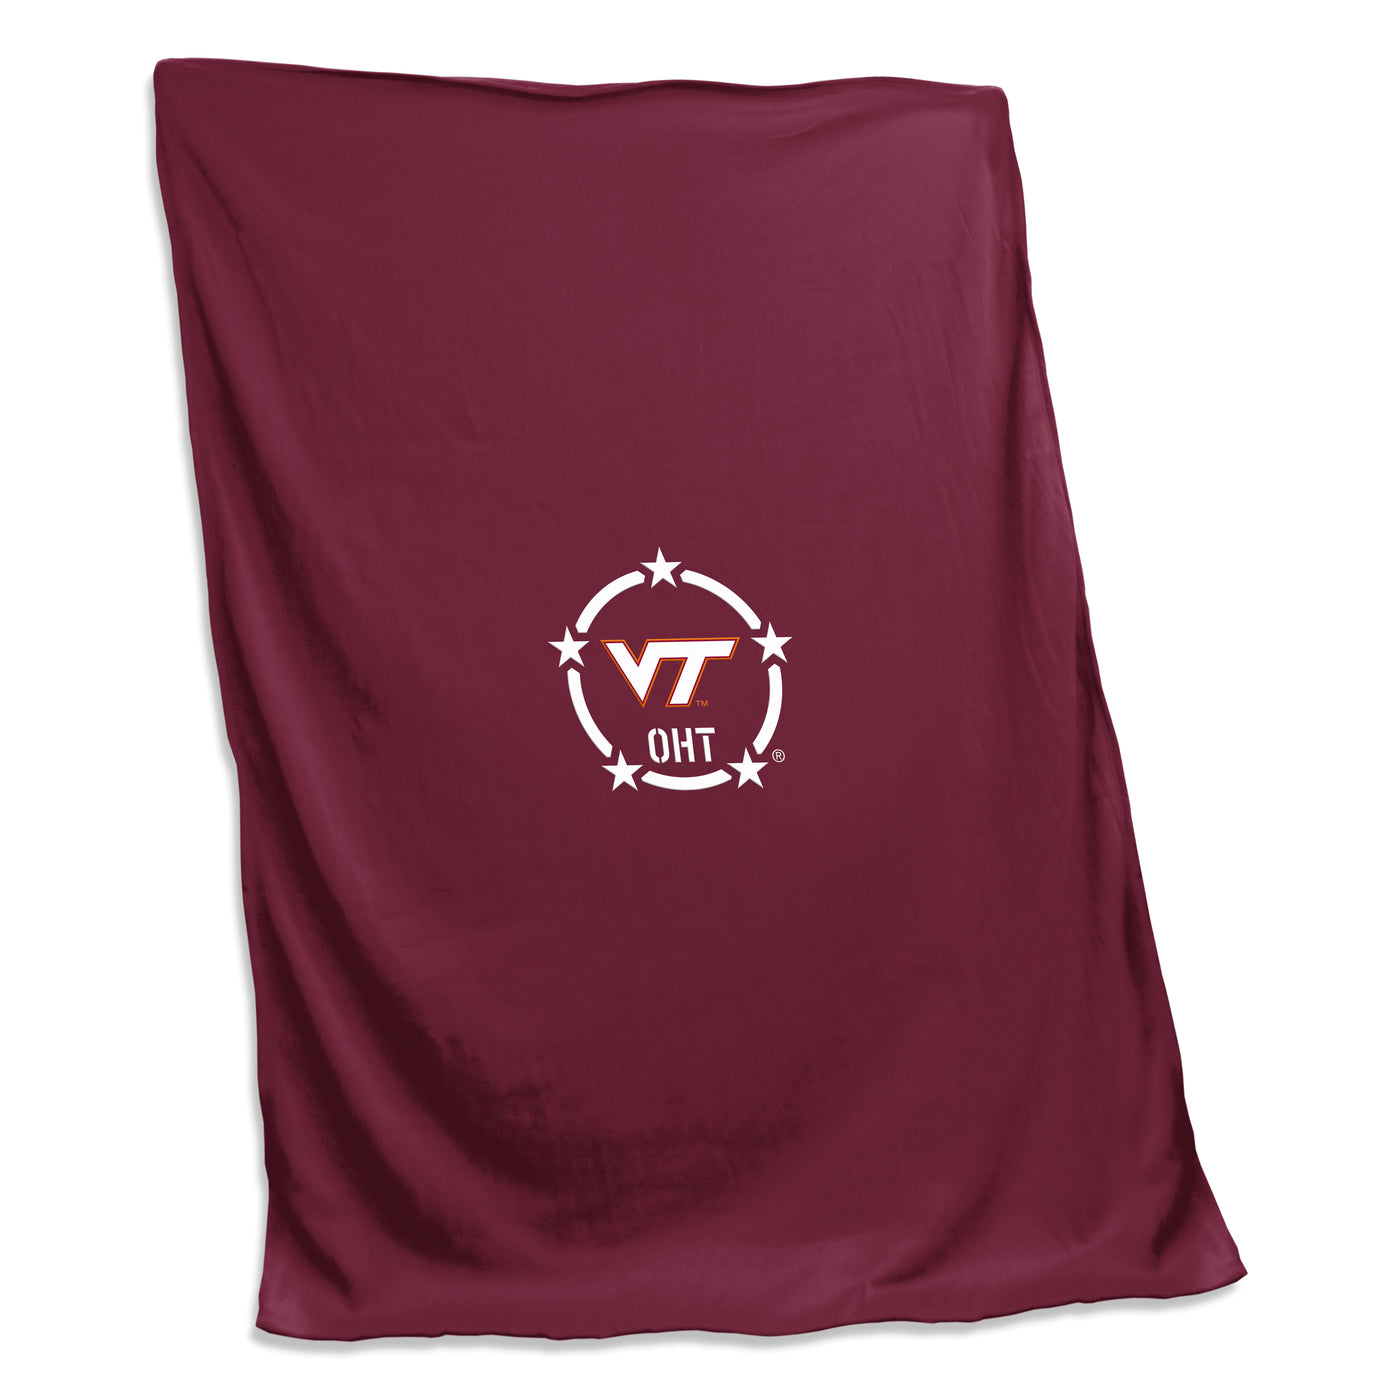 Virginia Tech/OHT Screened Sweatshirt Blanket